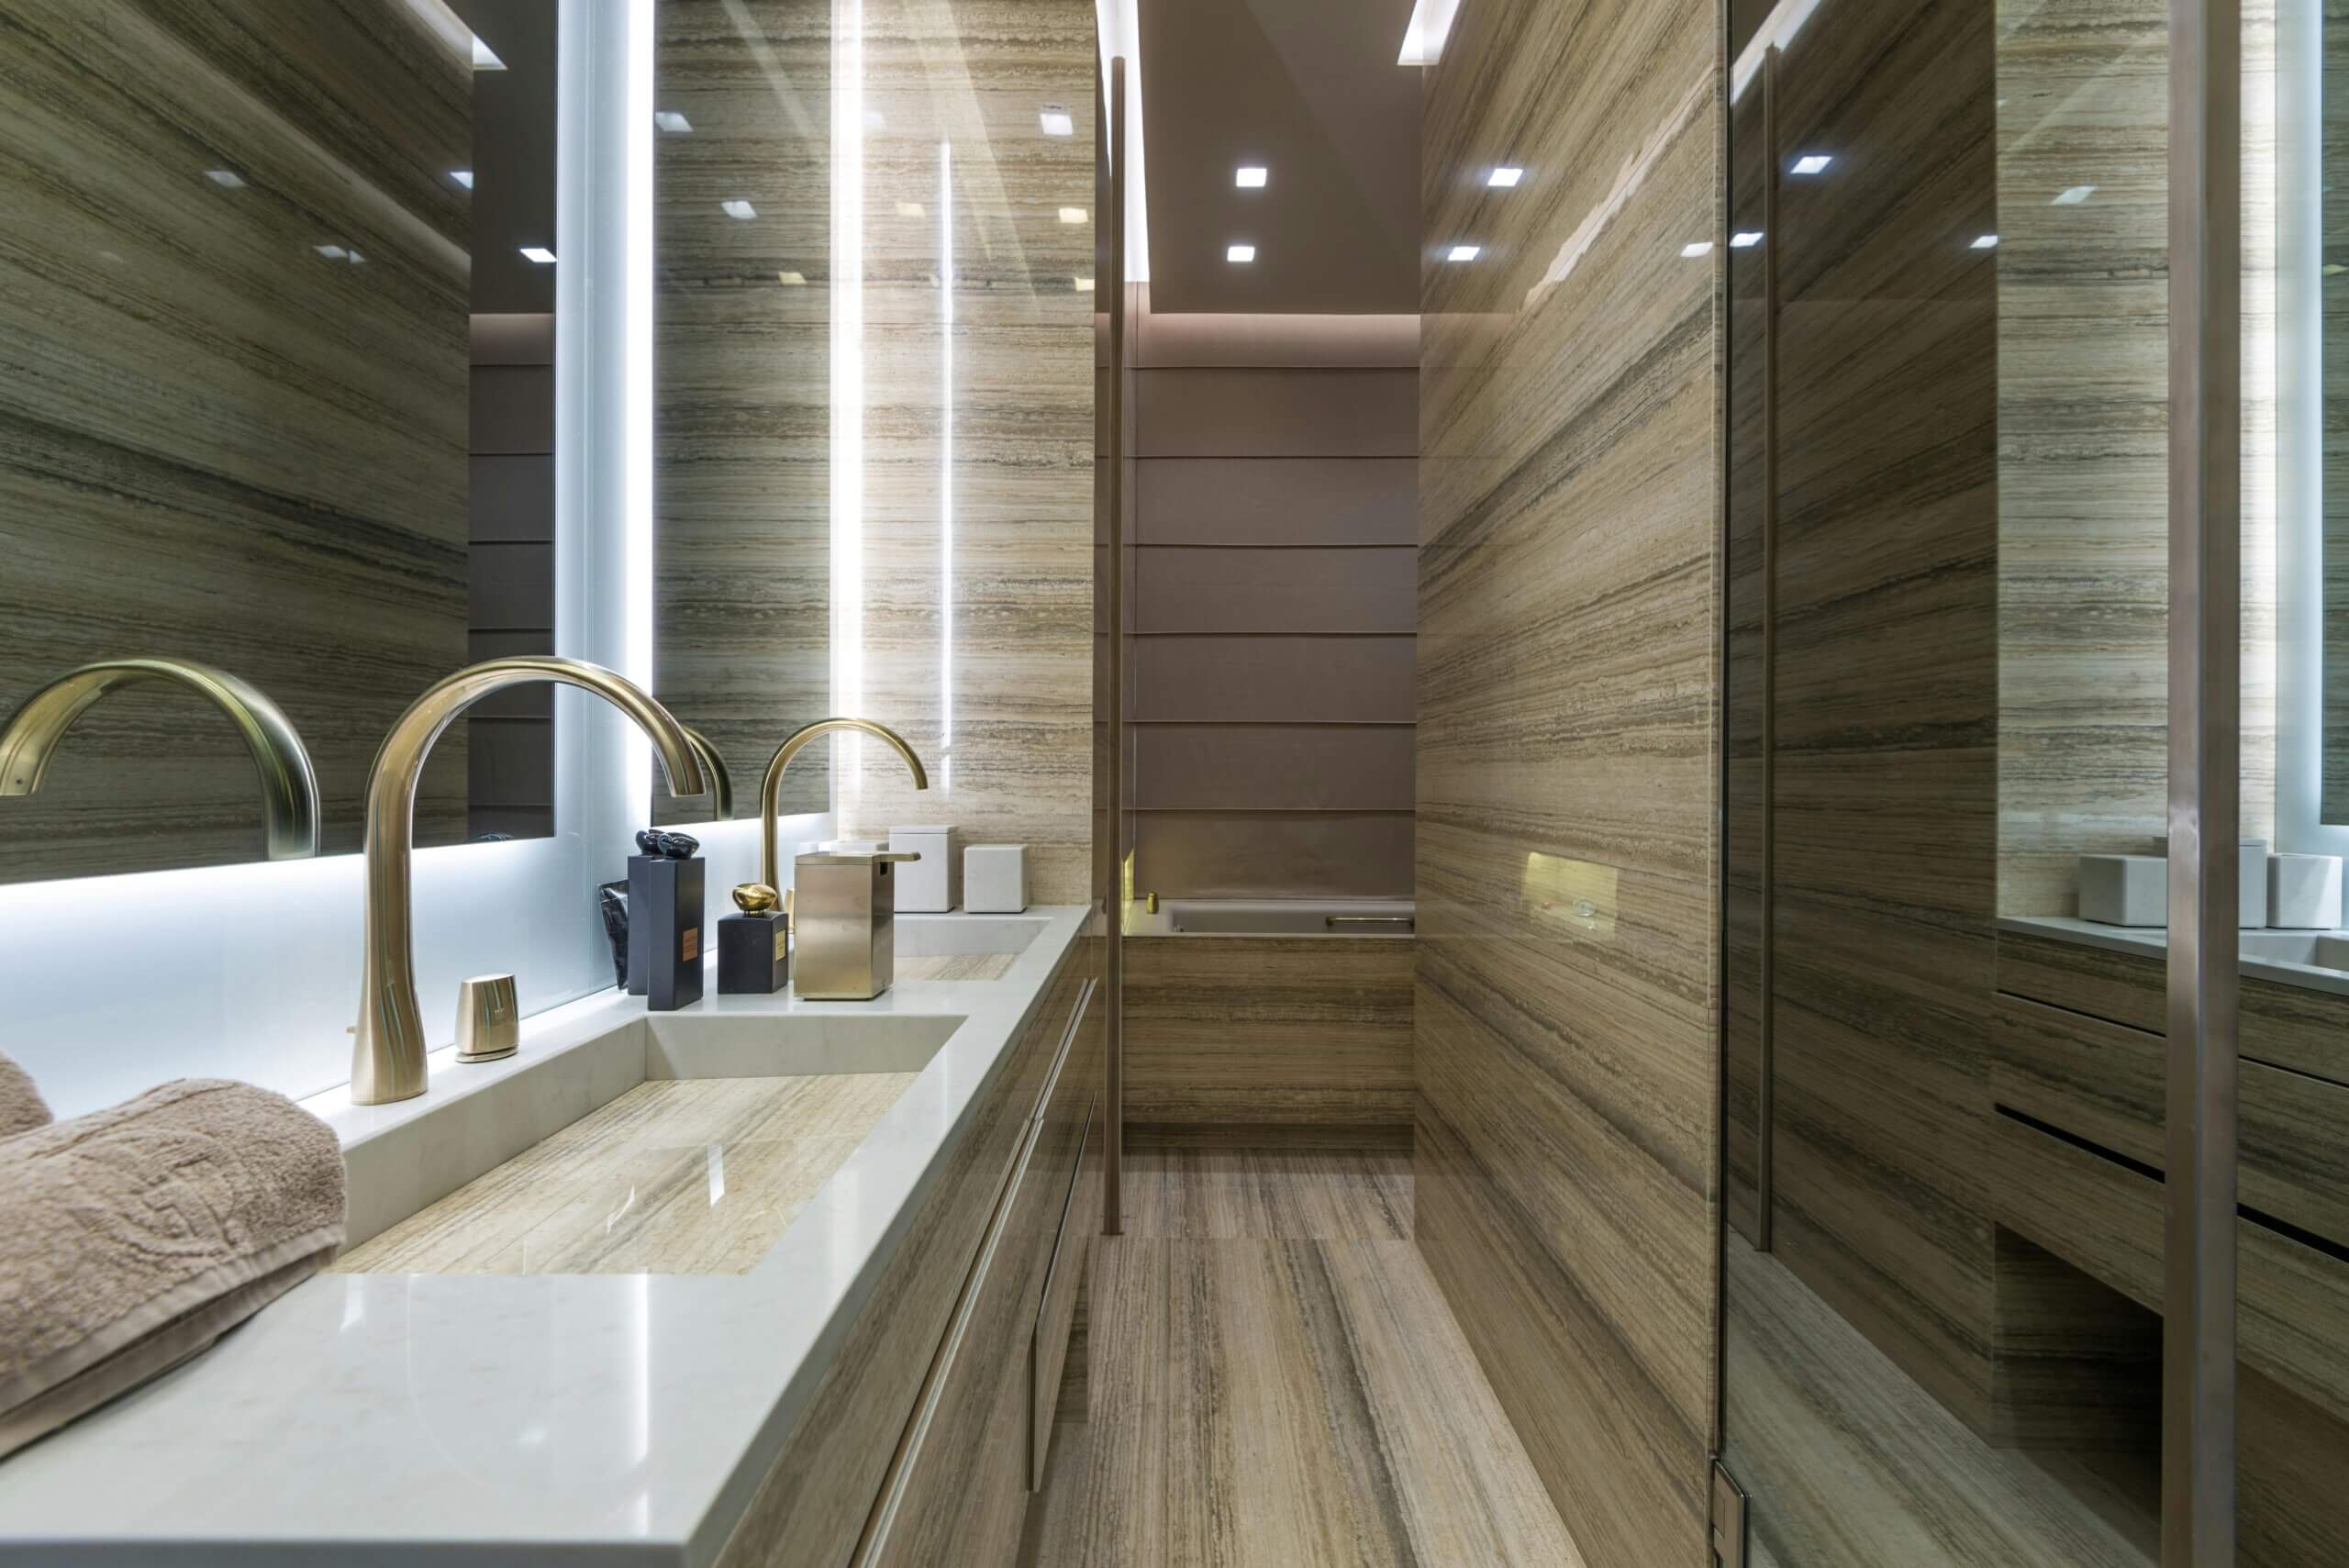 Statement Walls and Tile Trends in Modern Bathroom Design